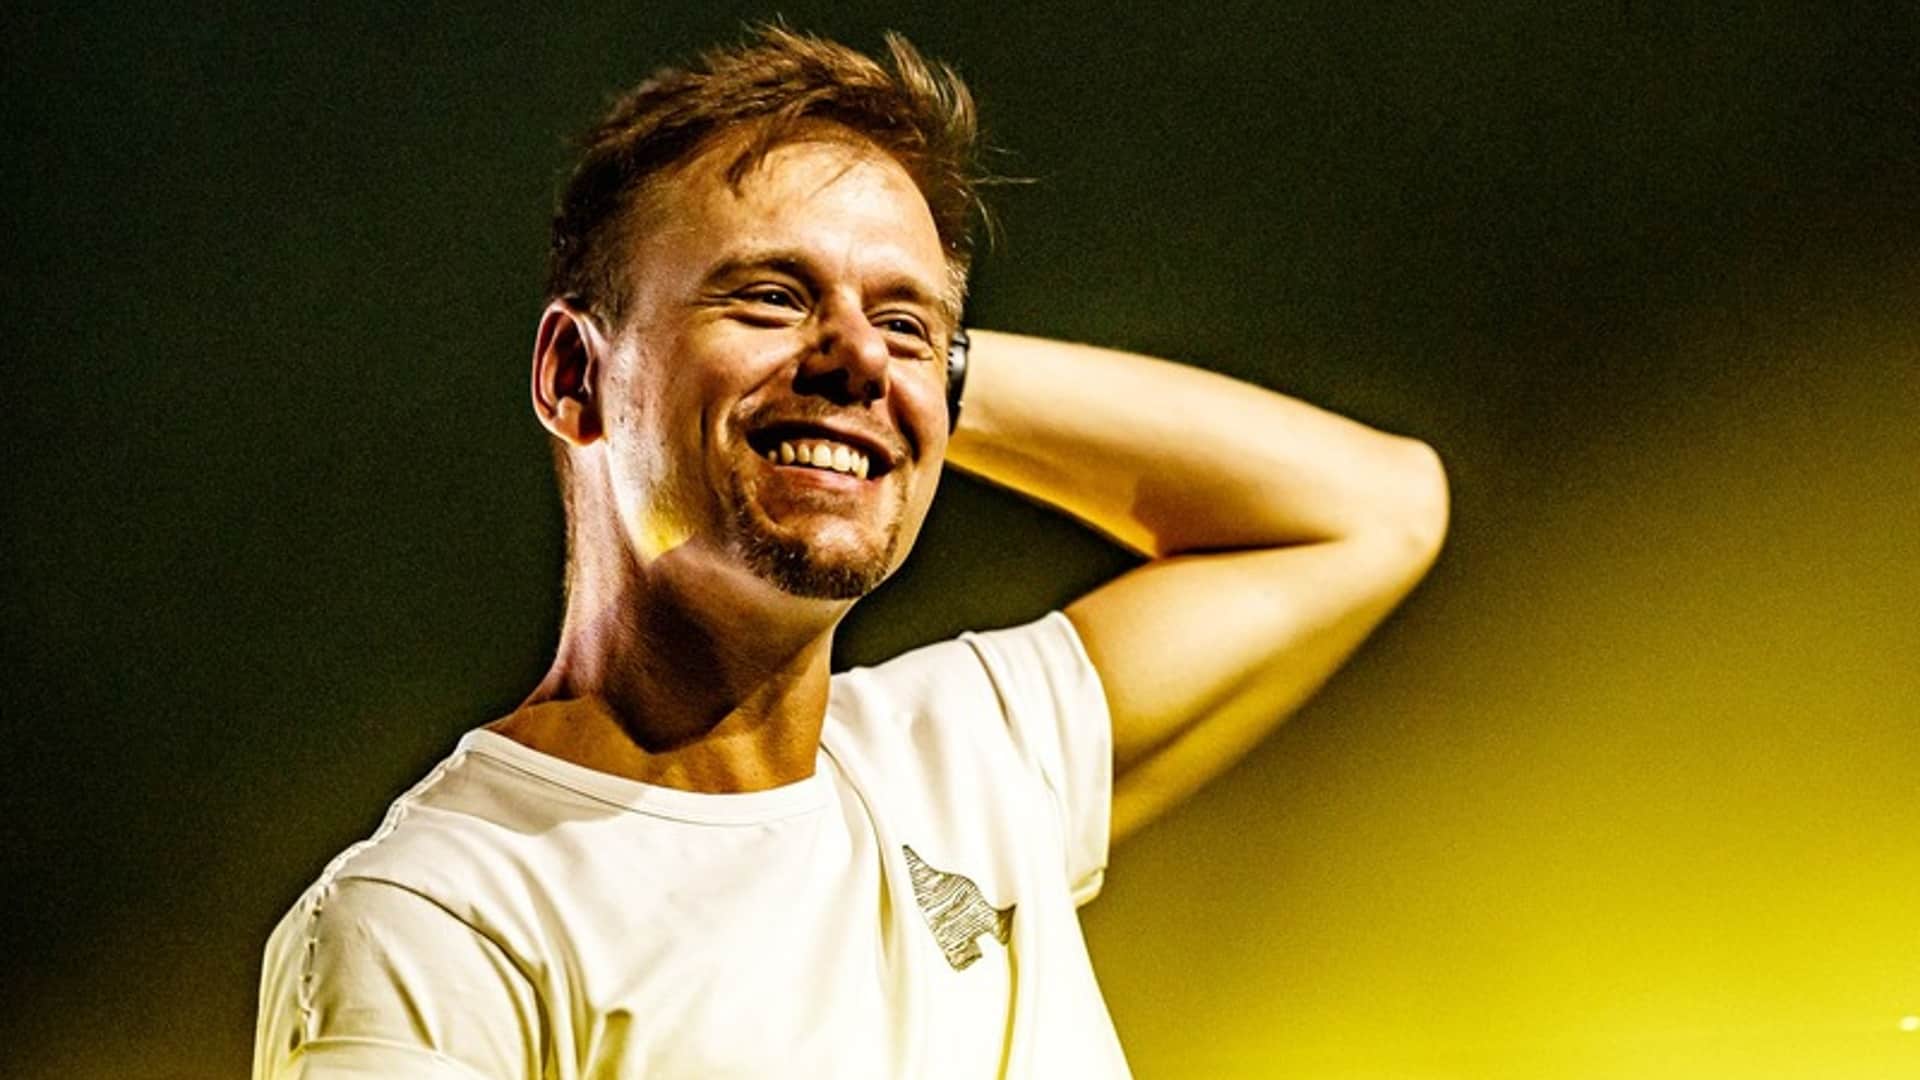 Armin van Buuren releases ‘A State Of Trance 2021’ mix album